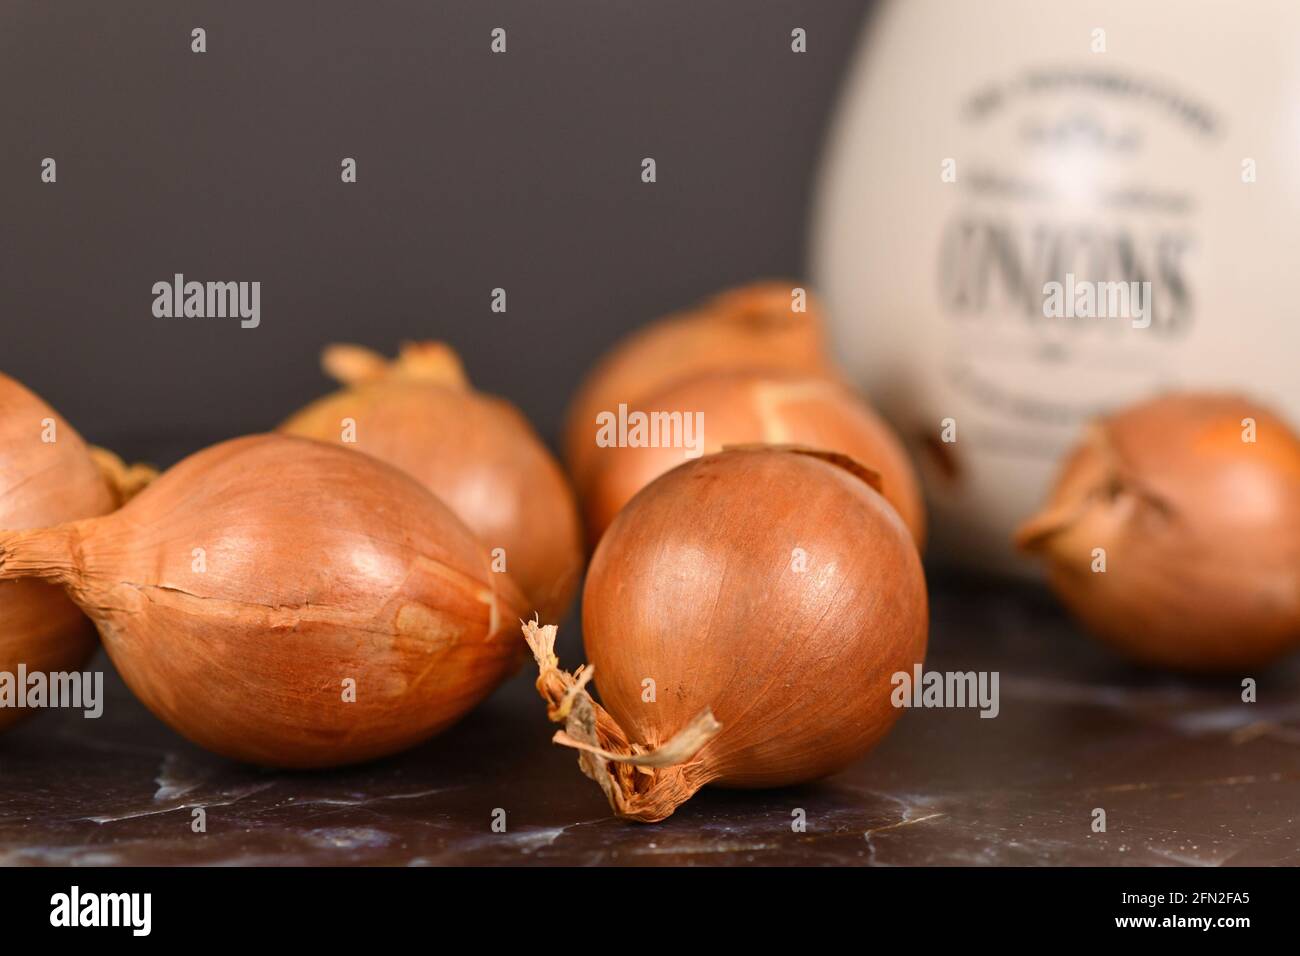 Whole raw unpeeled bulb onions on dark background Stock Photo